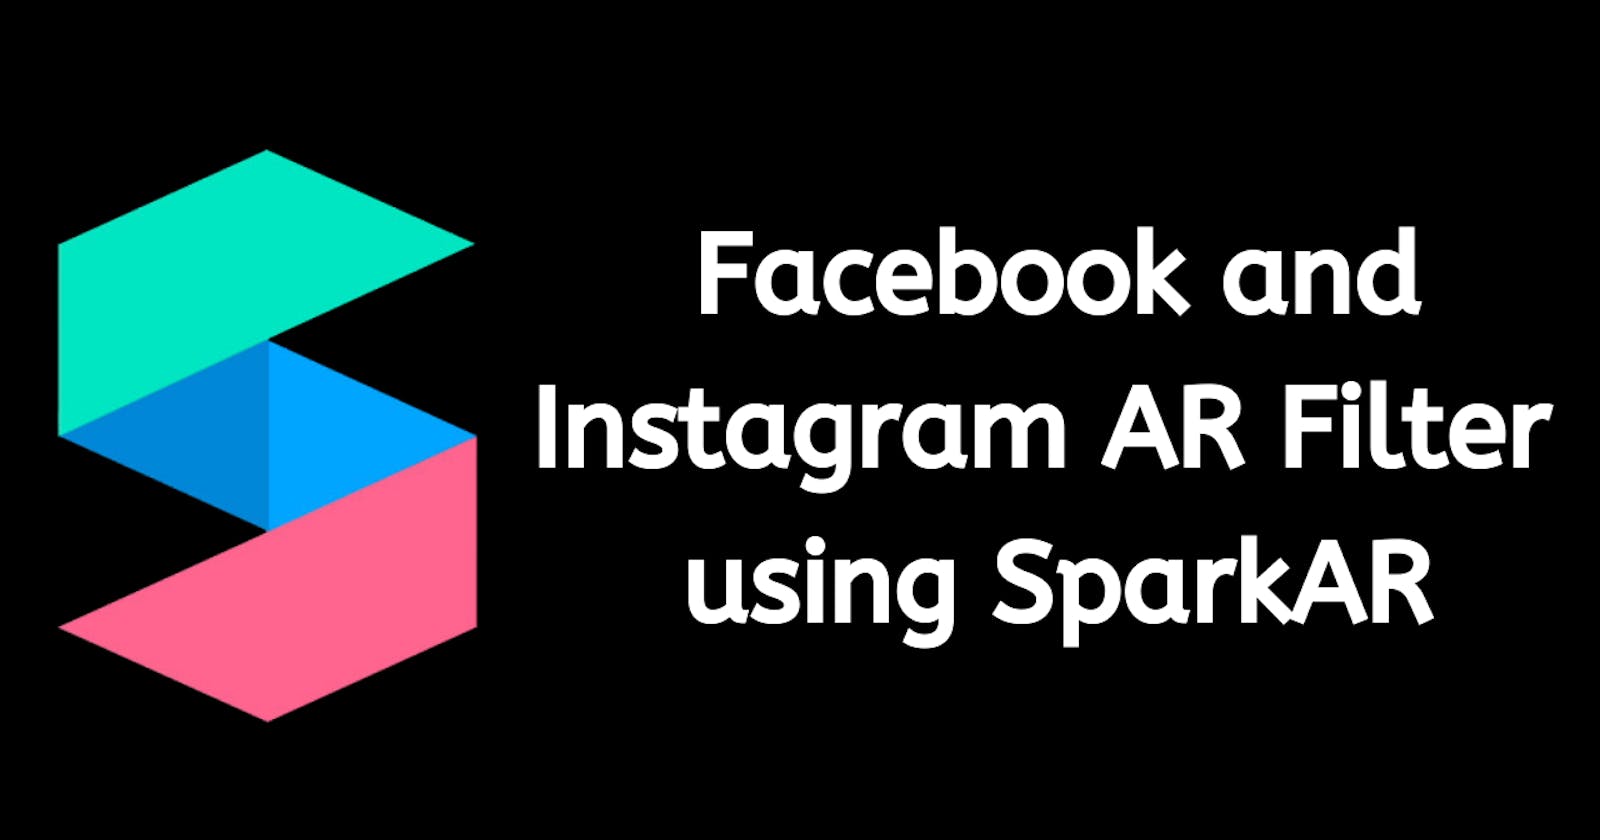 Create a simple Facebook and Instagram AR filter